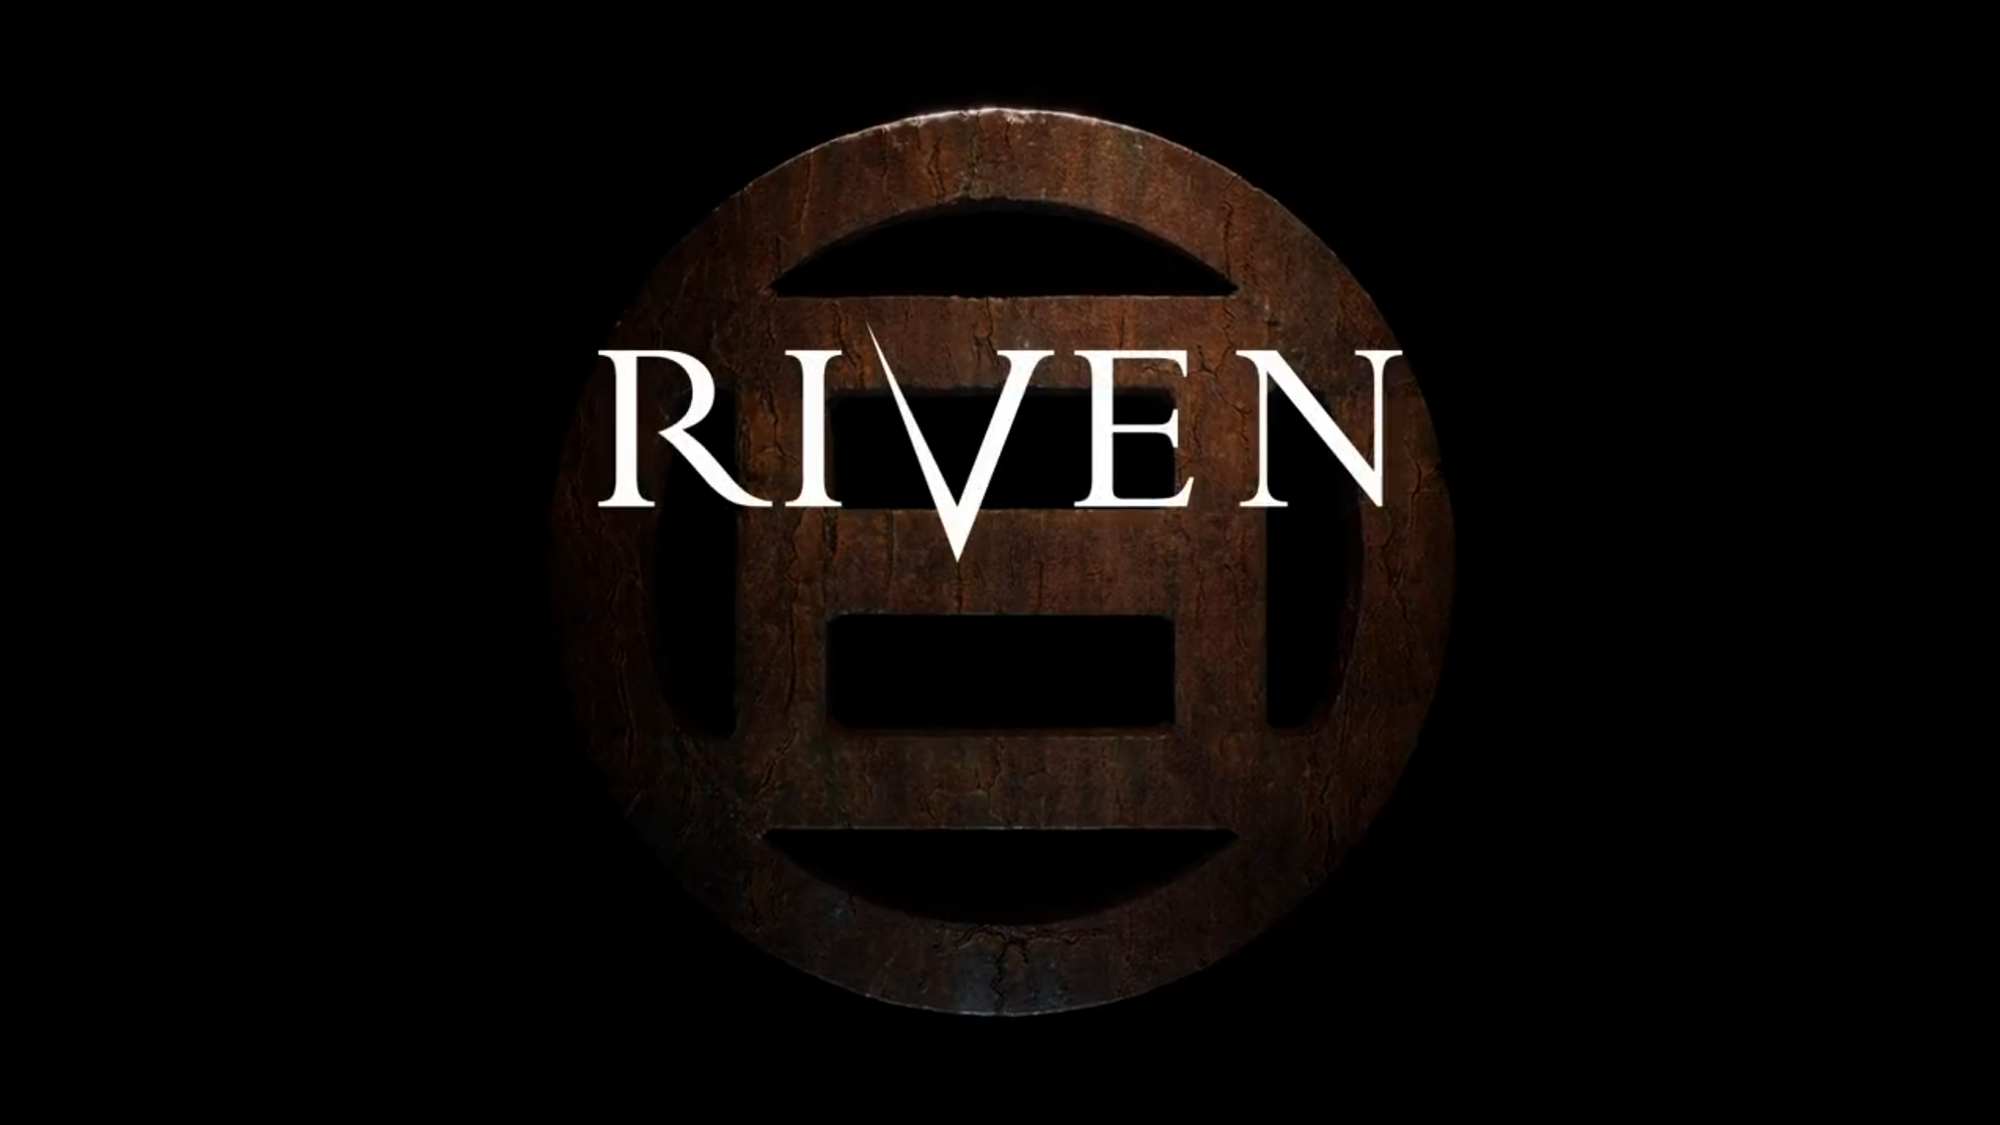 Riven the sequel to myst. Riven игра. Riven 1997. Мист Riven.